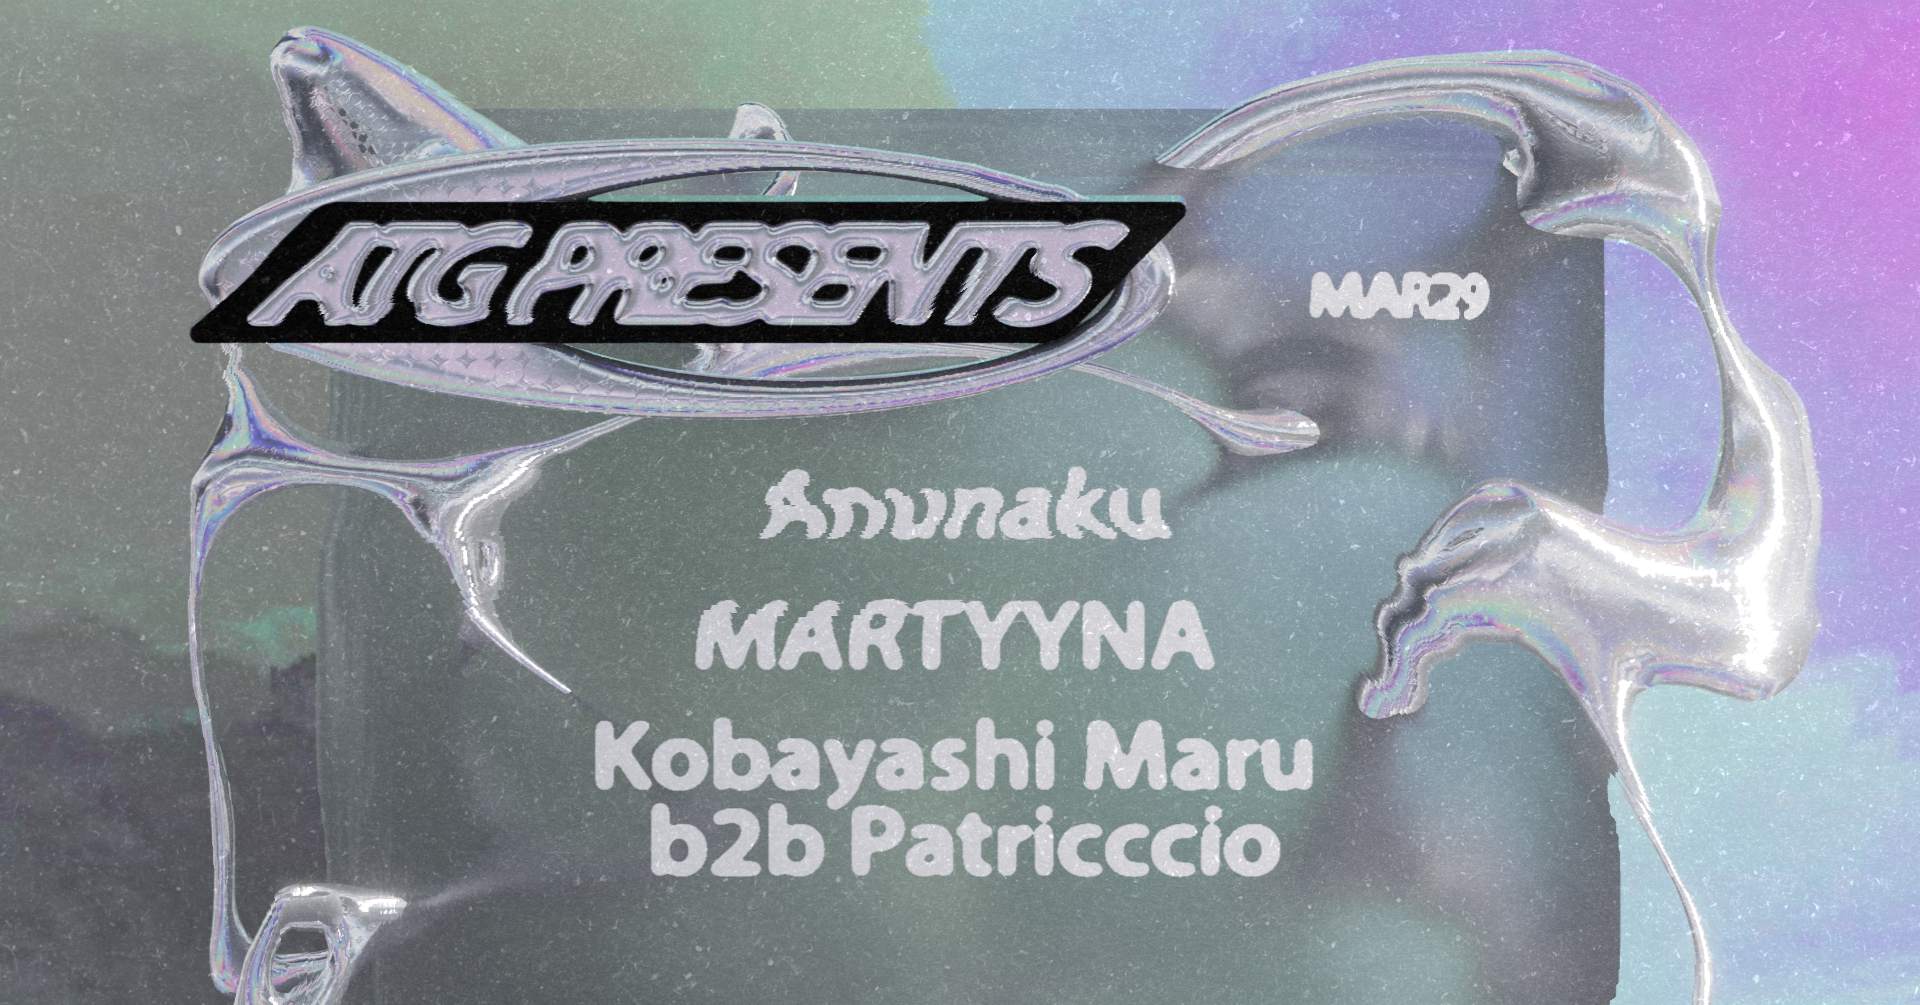 ATG presents: Anunaku, Martyyna, Kobayashi Maru b2b patricccio - Página frontal